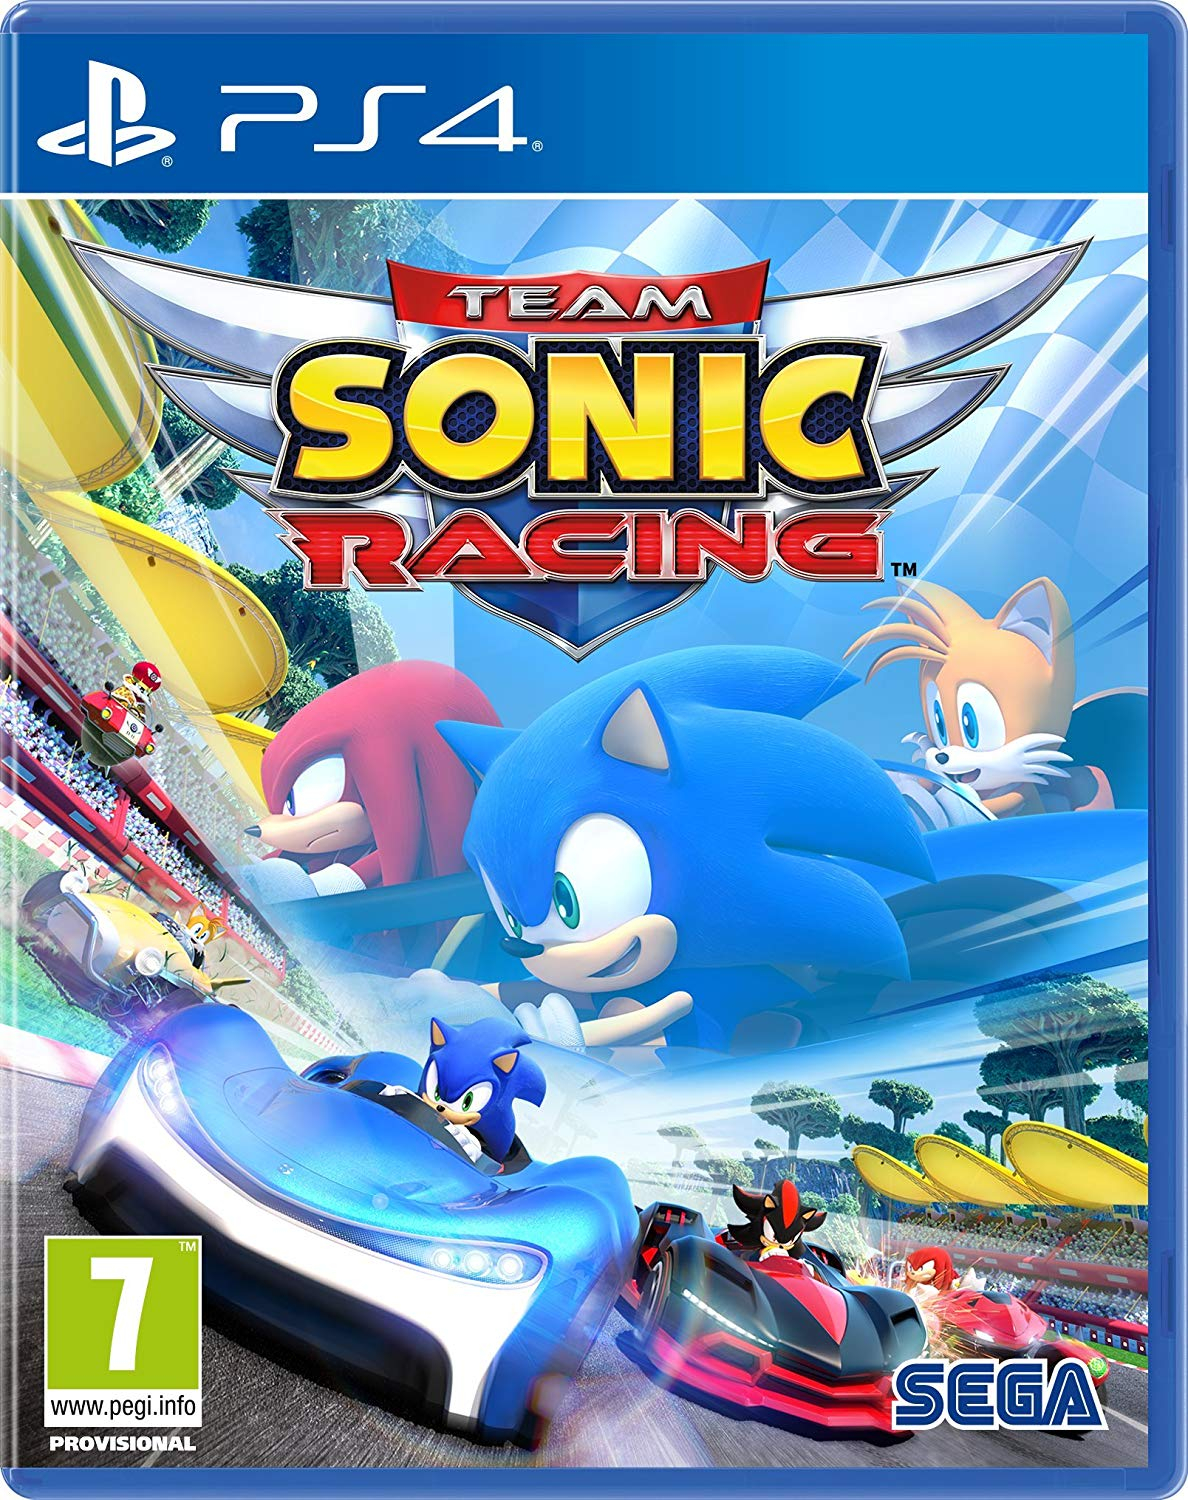 124Â° - Team Sonic Racing (PS4/Xbox One) Â£17 @ ASDA